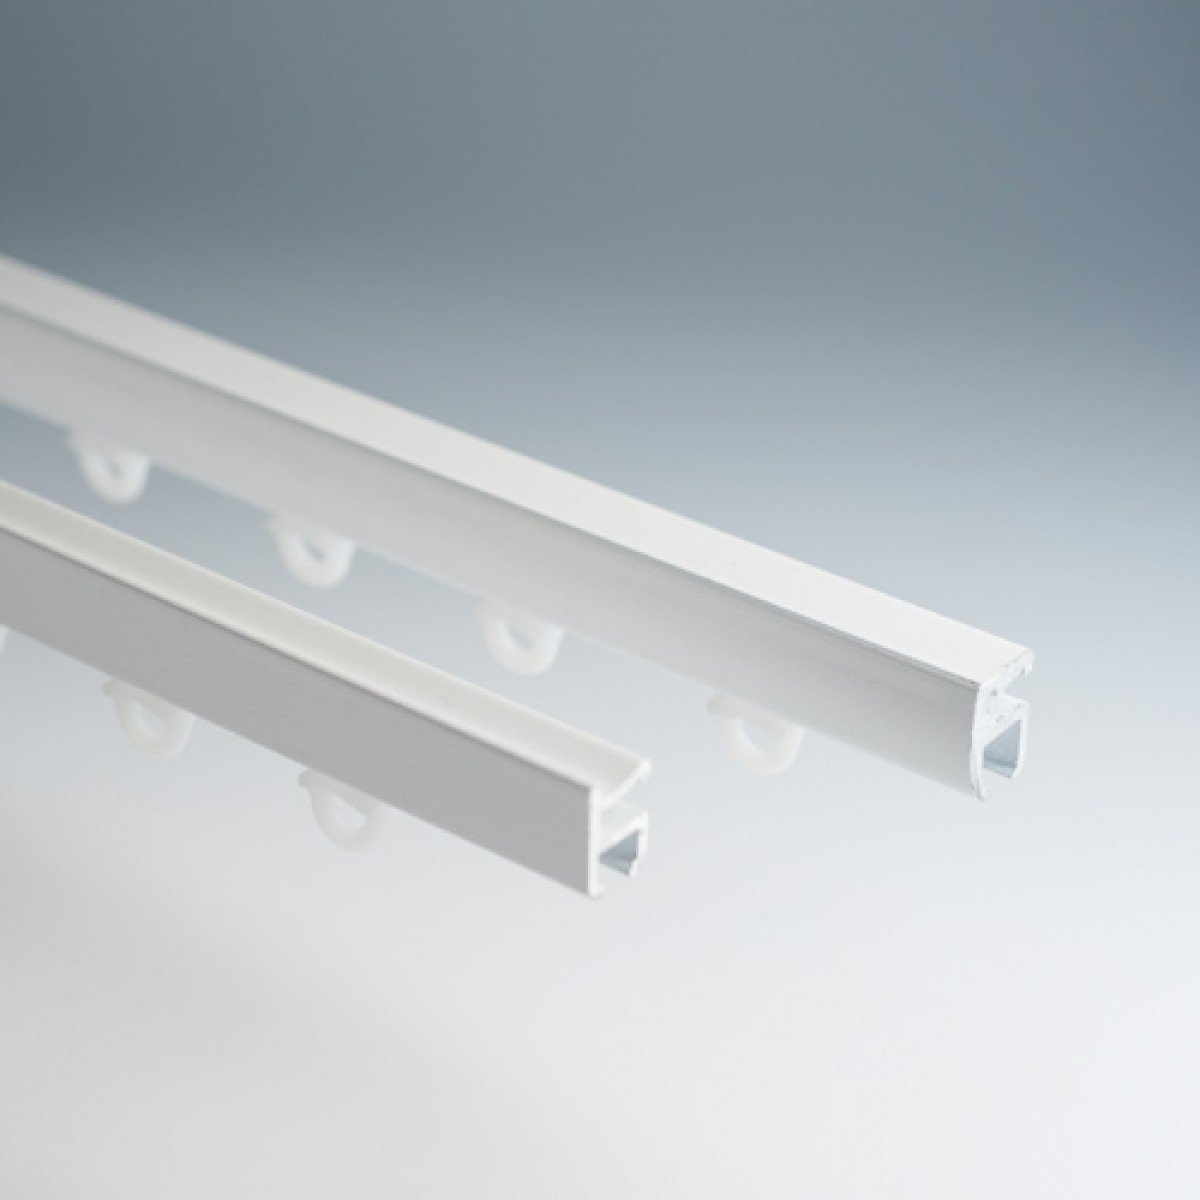 De SF Basic Aluminium Gordijnrails voor de wat gordijnen vitrage